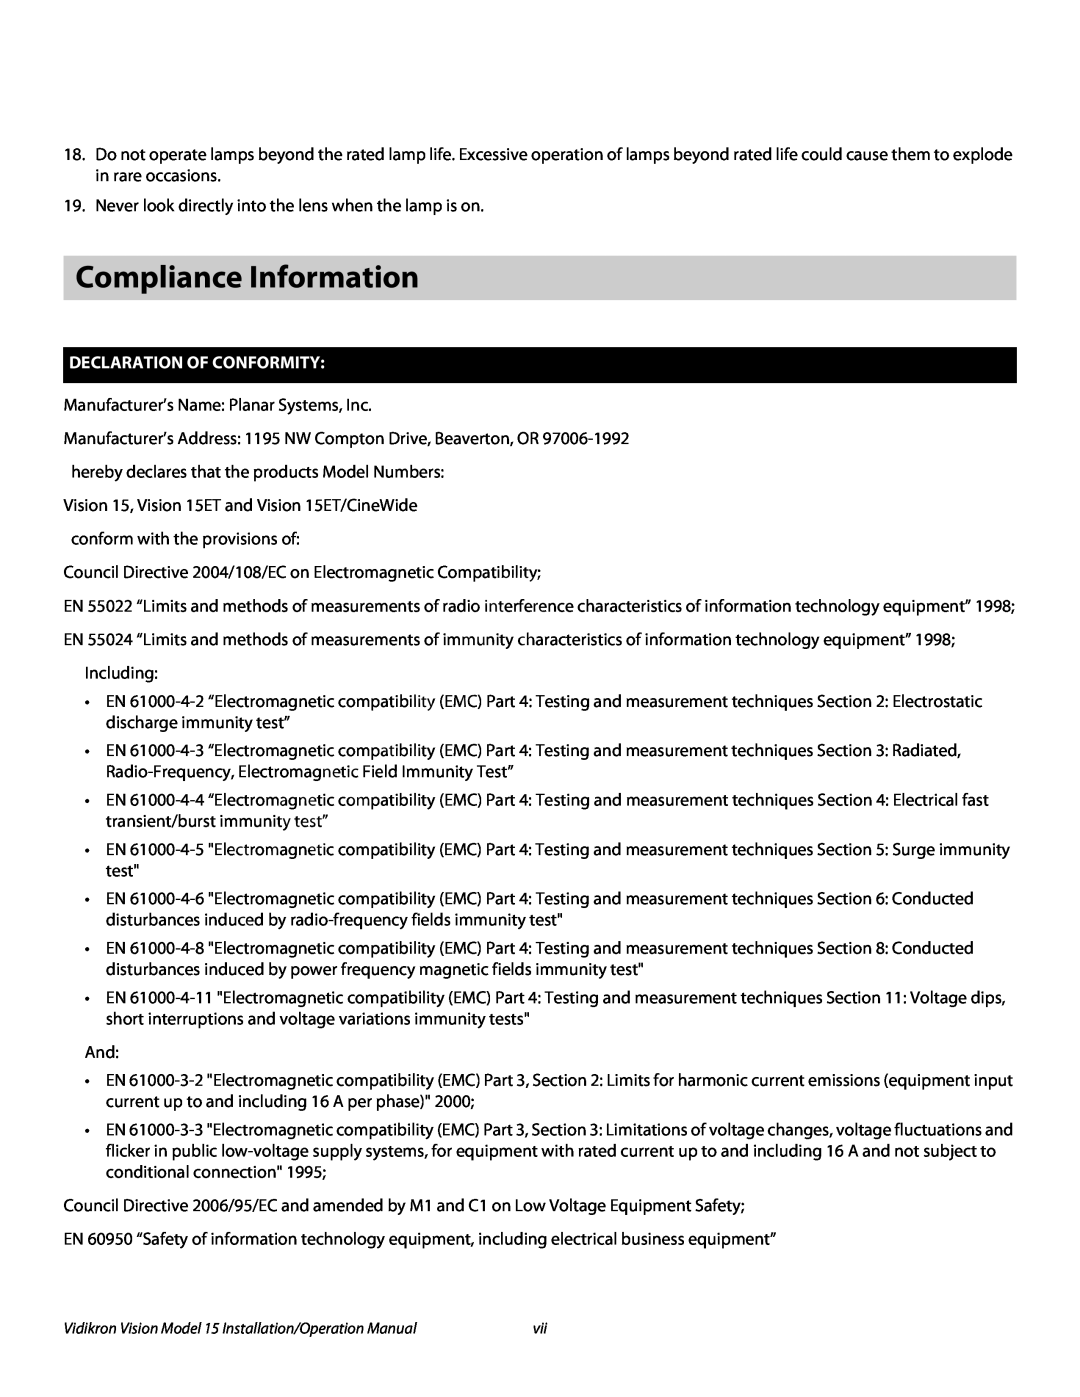 Vidikron Vision 15ET/CineWideTM operation manual Compliance Information, Declaration Of Conformity 